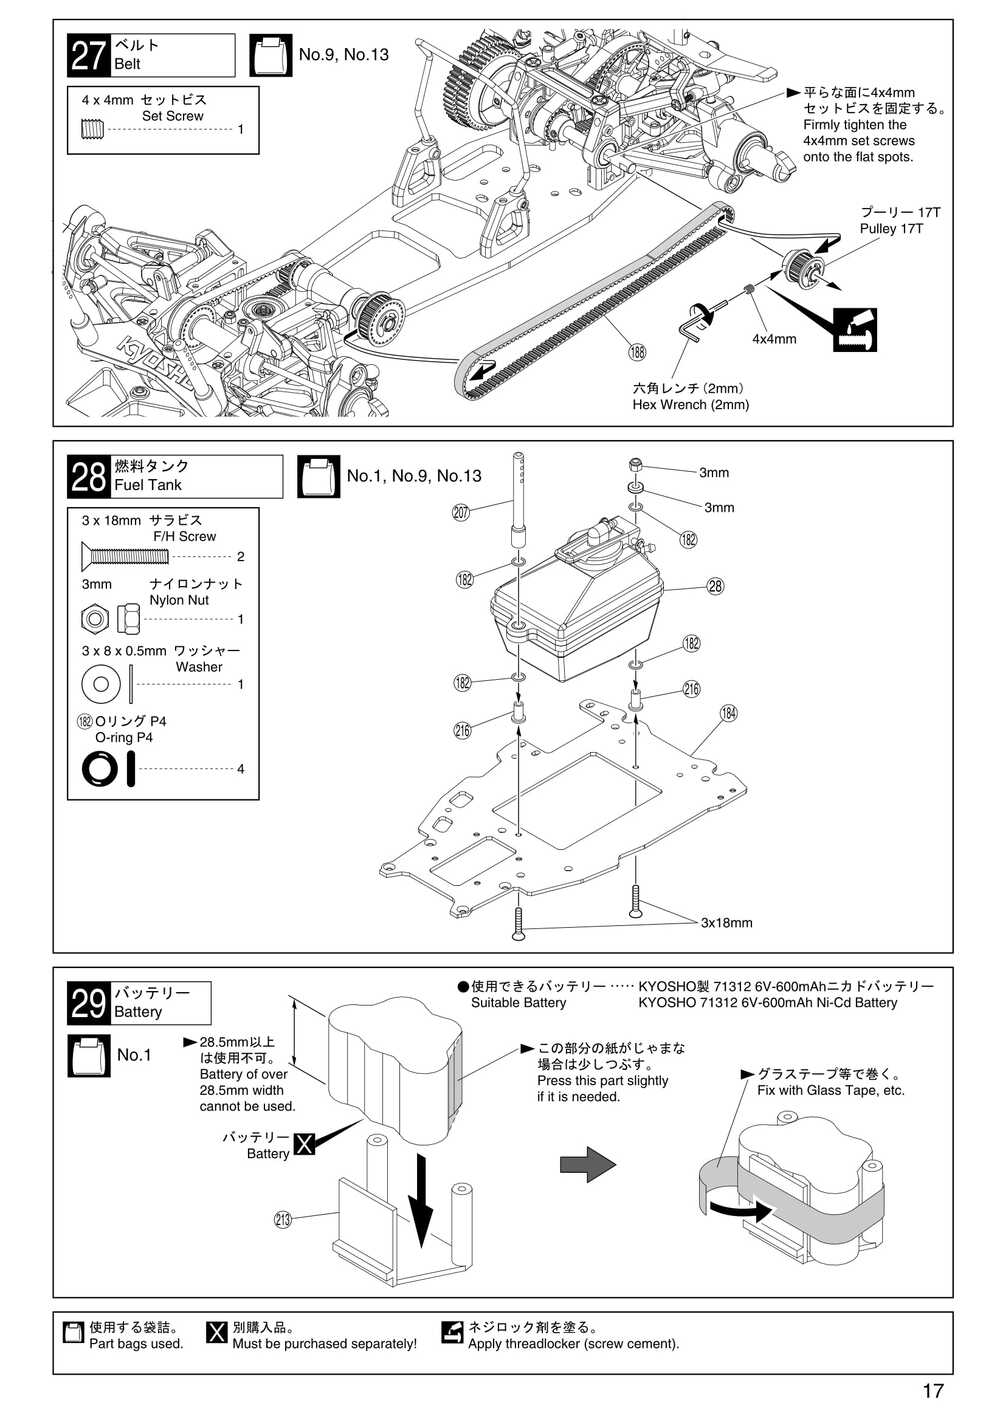 Kyosho - 31041 - Fantom Sports - Manual - Page 17